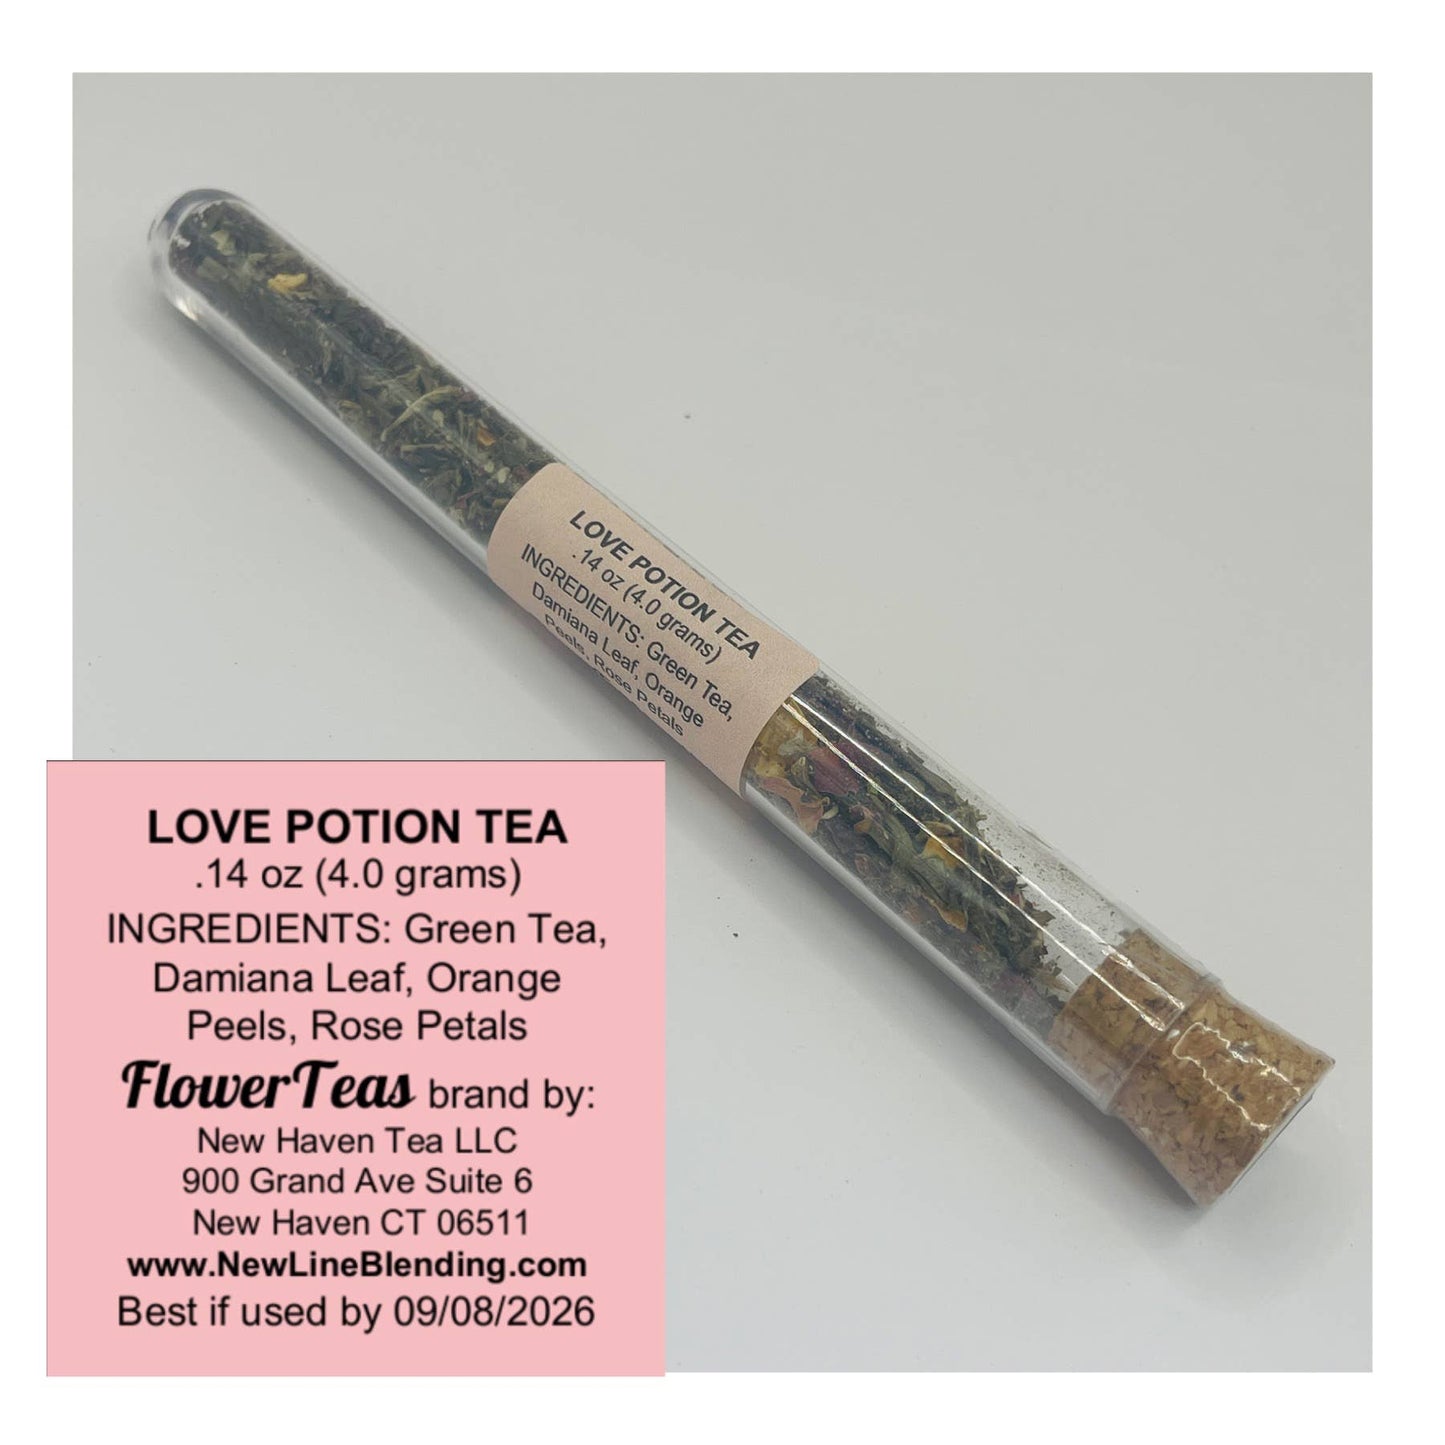 Loose Leaf Tea or Matcha in Test Tube -No Calorie Eye Candy!: Pomegranite Mojito